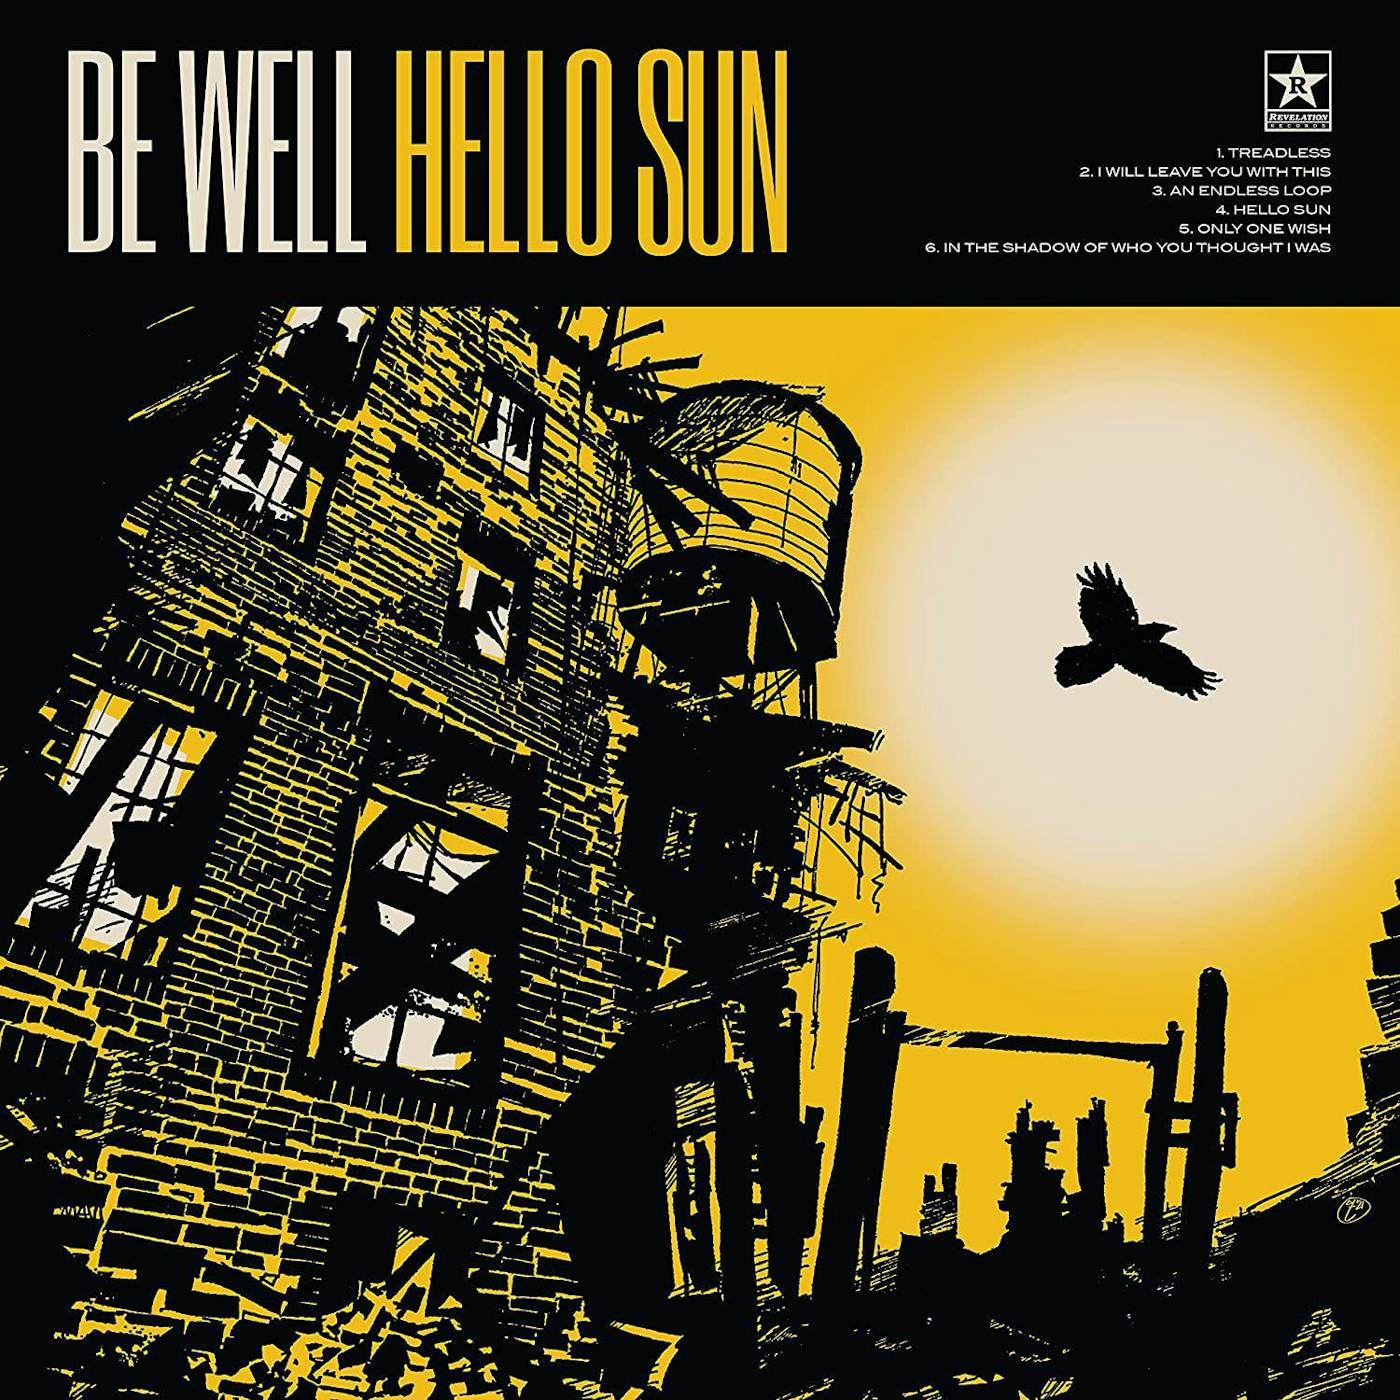 Be Well Hello Sun Vinyl Record